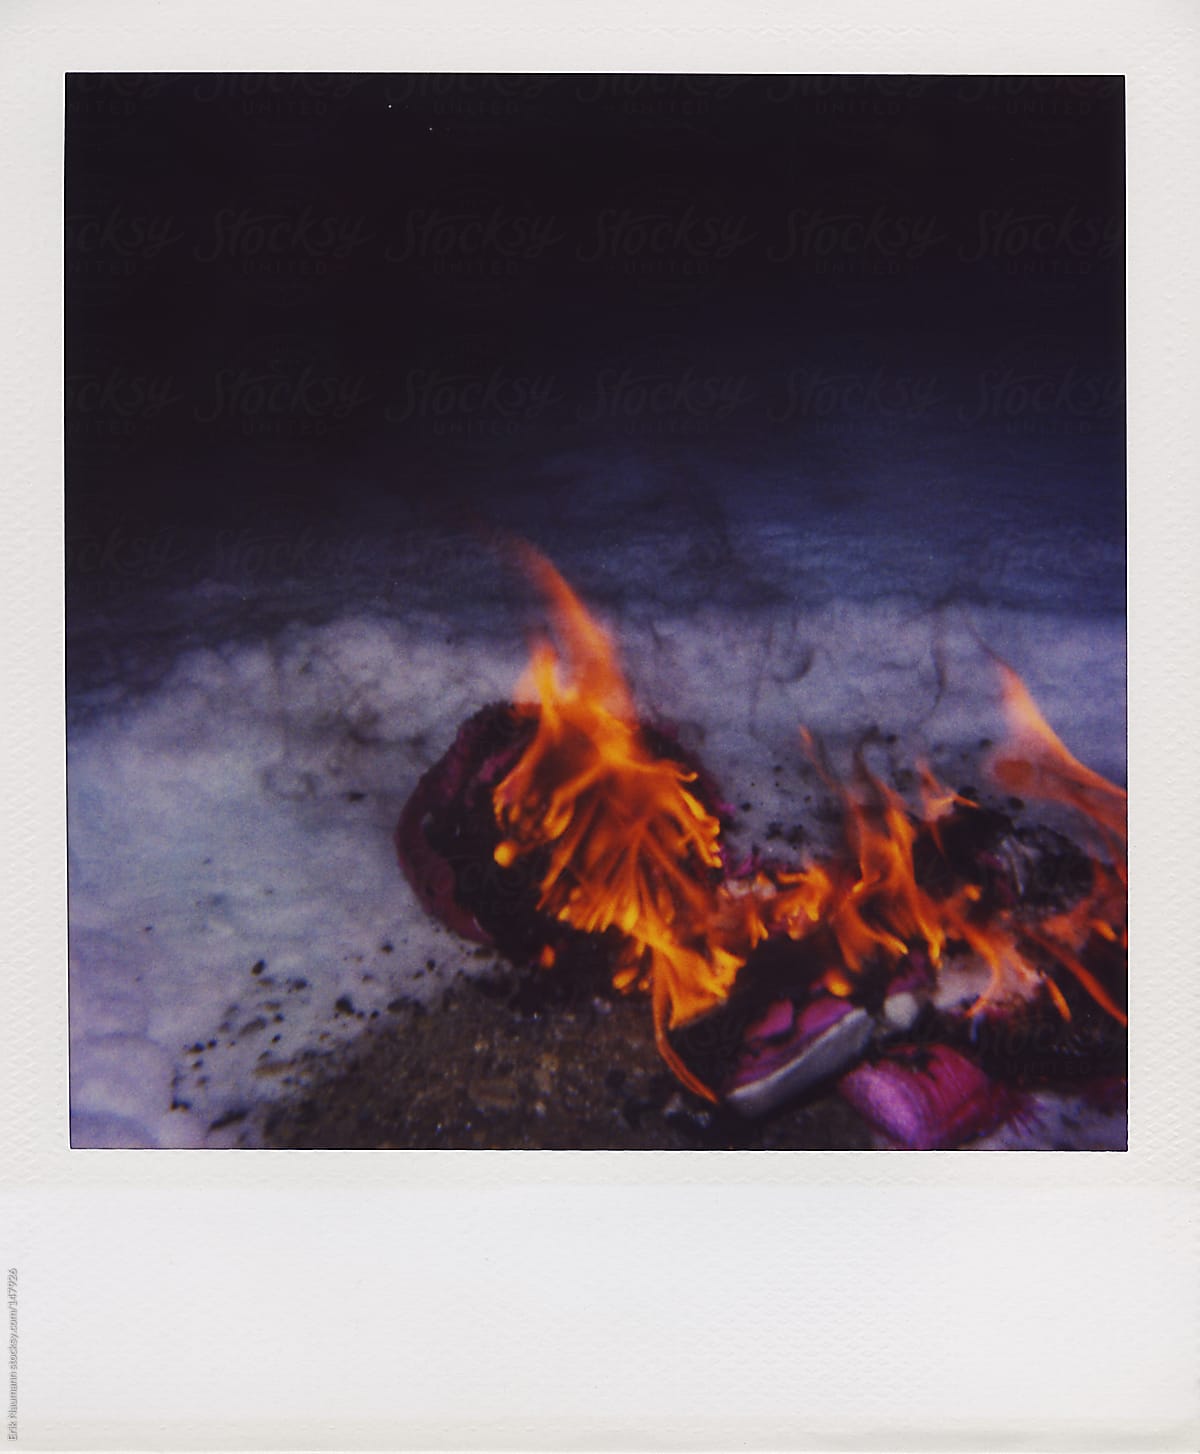 Polaroid Of A Furby Burning In Snow By Stocksy Contributor Erik